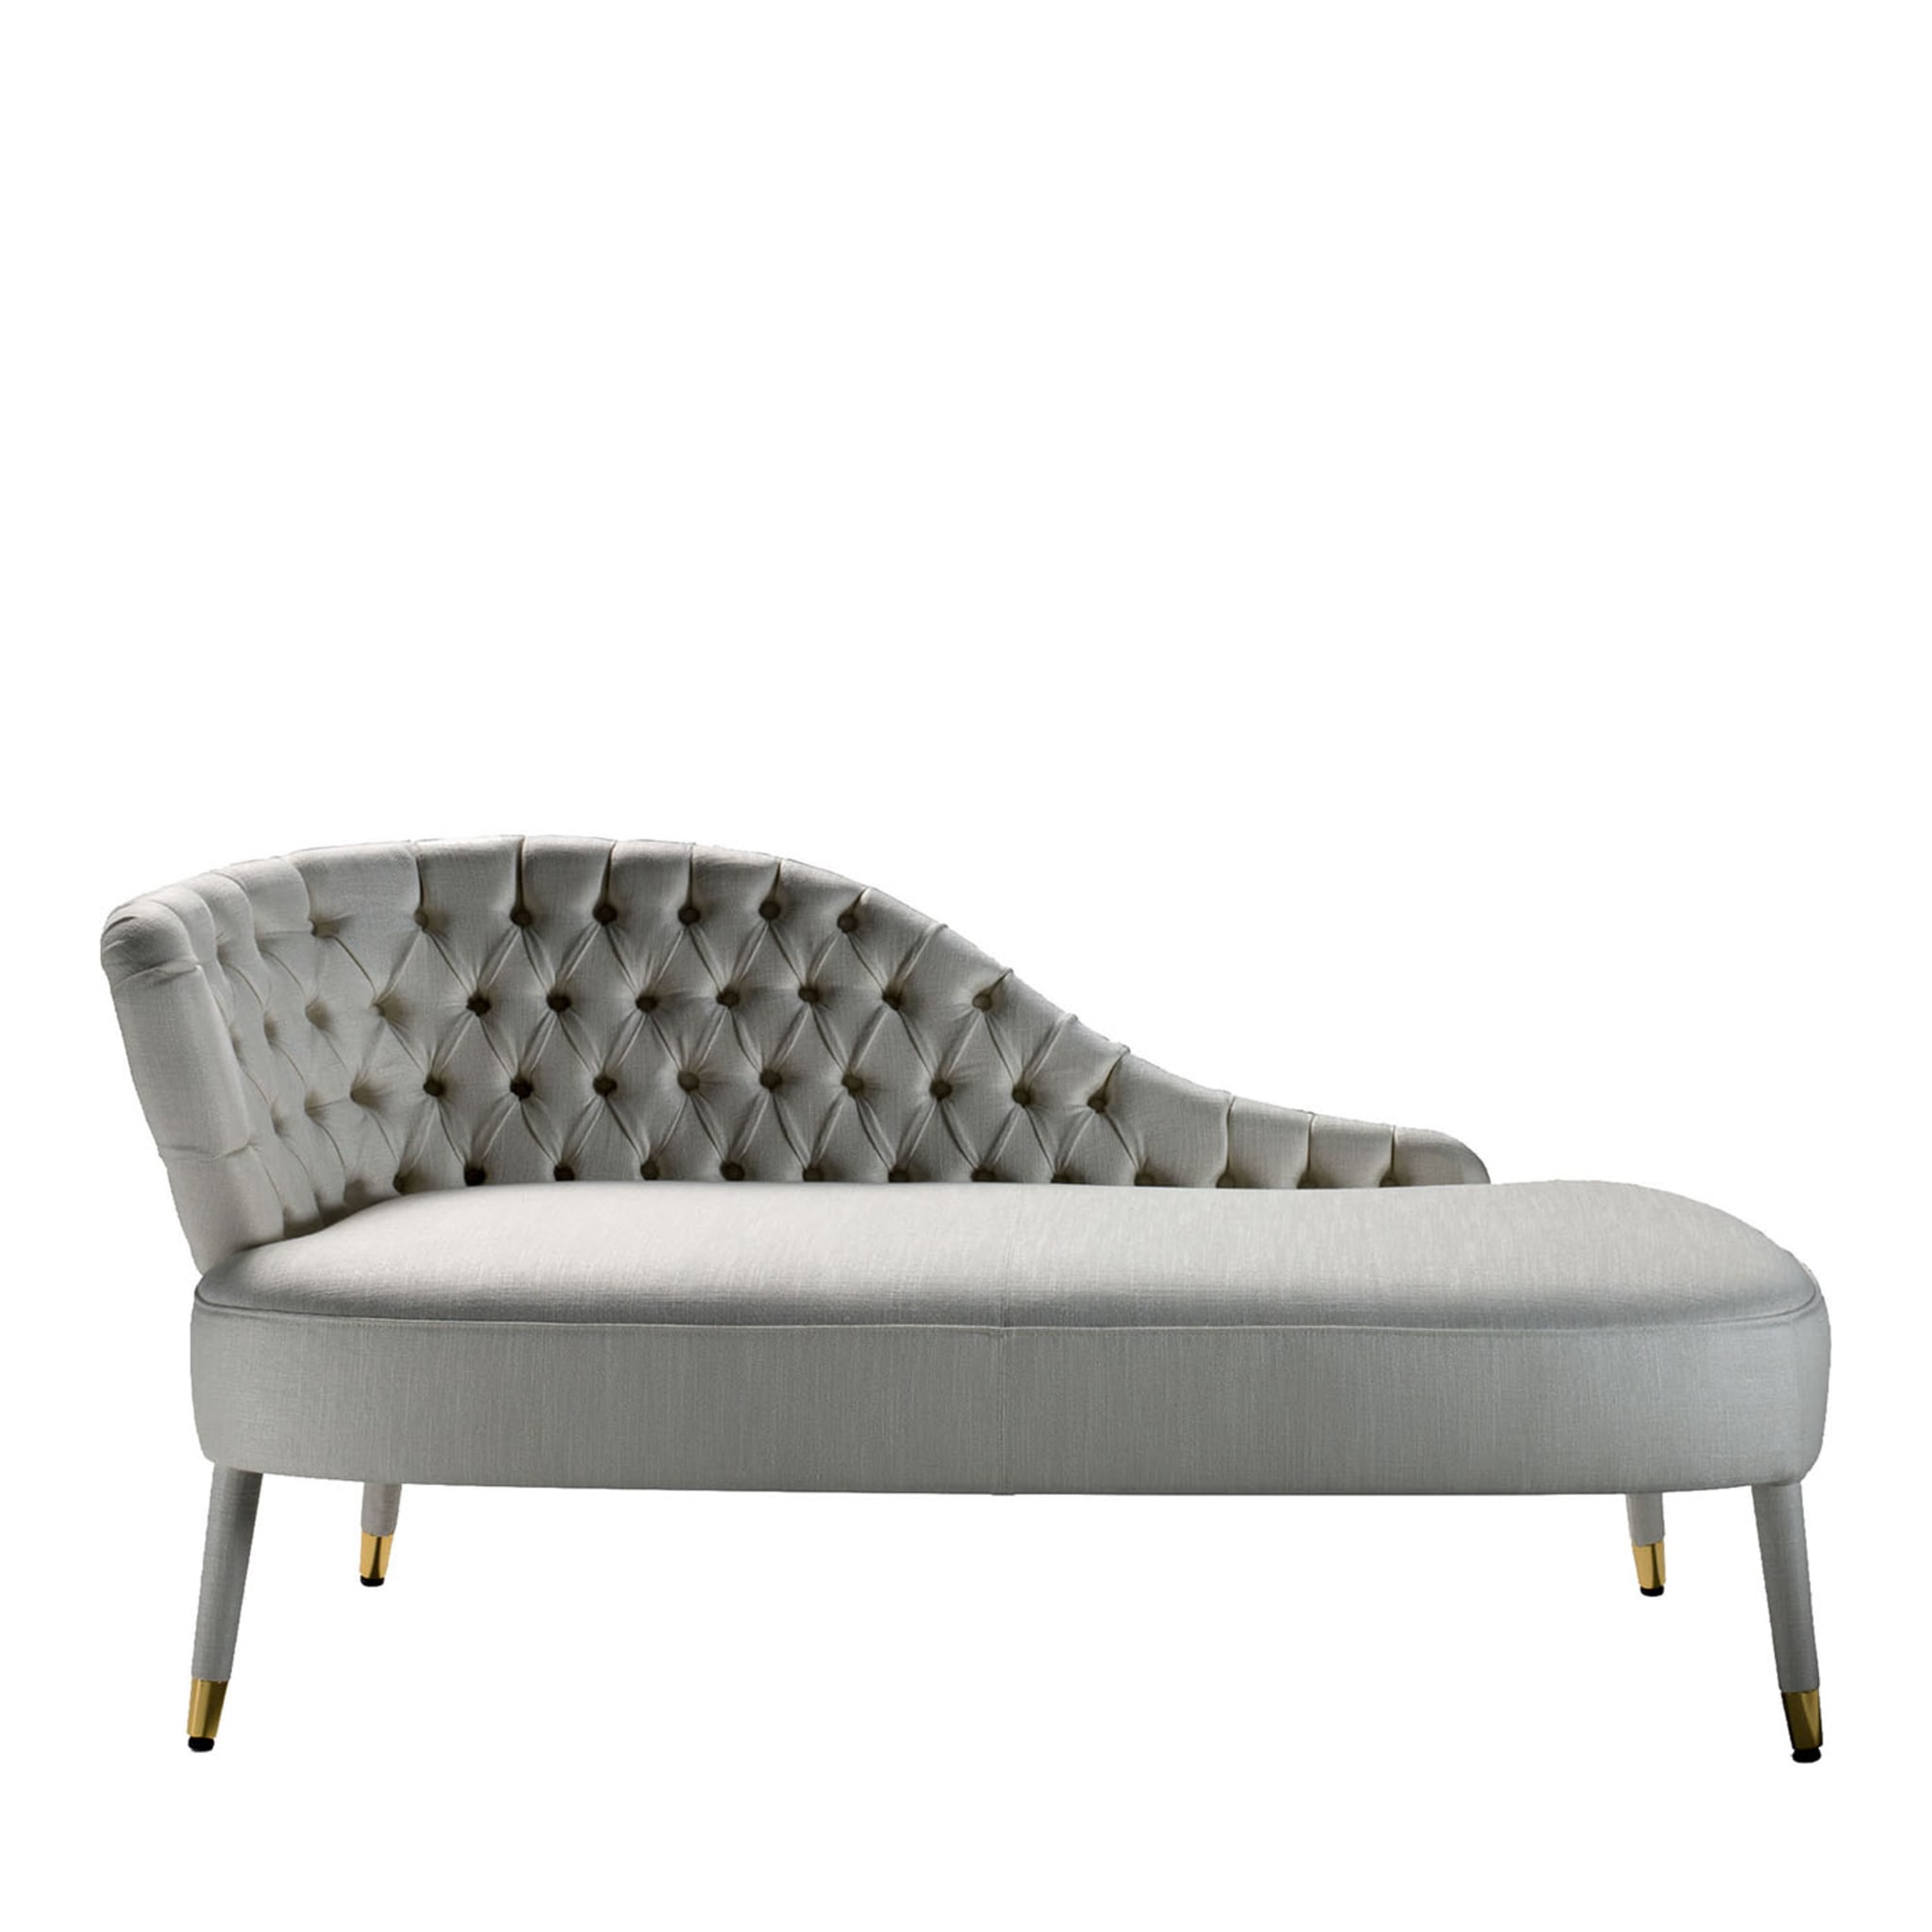 Penelope Asymmetrical Gray Sofa - Main view